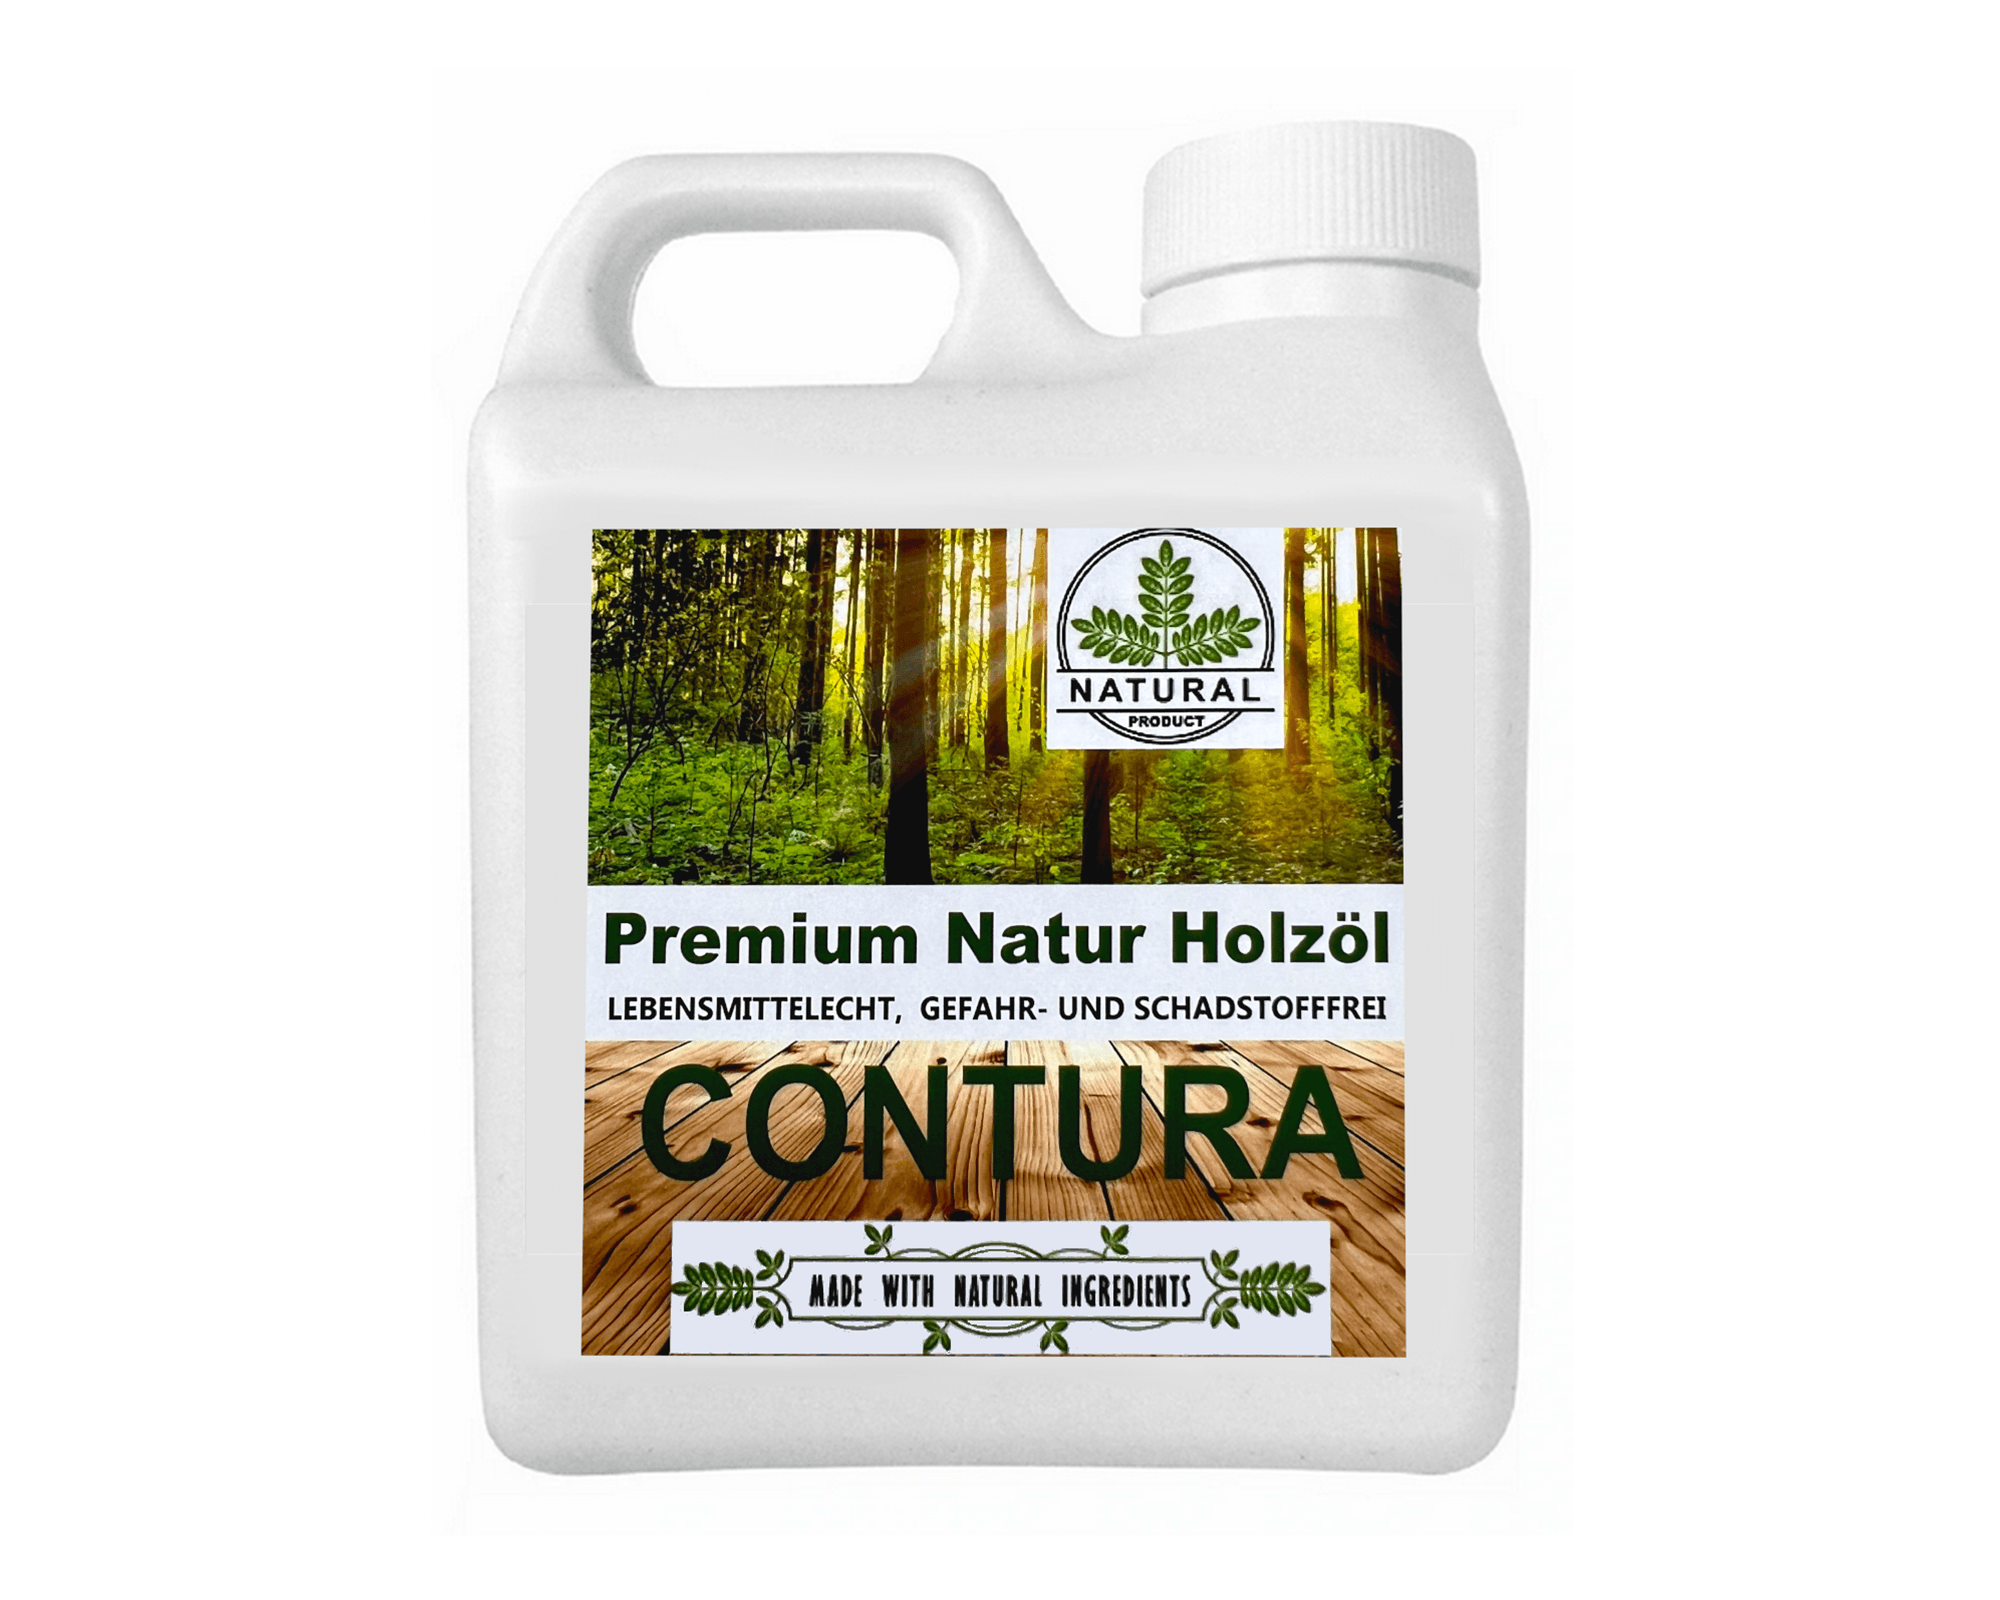 Contura Premium 1 Liter Holzöl Natur Holzschutz ohne Schadstoffe Hartöl  Möbel Pflegeöl | Farbmanufaktur Contura Berkemeier